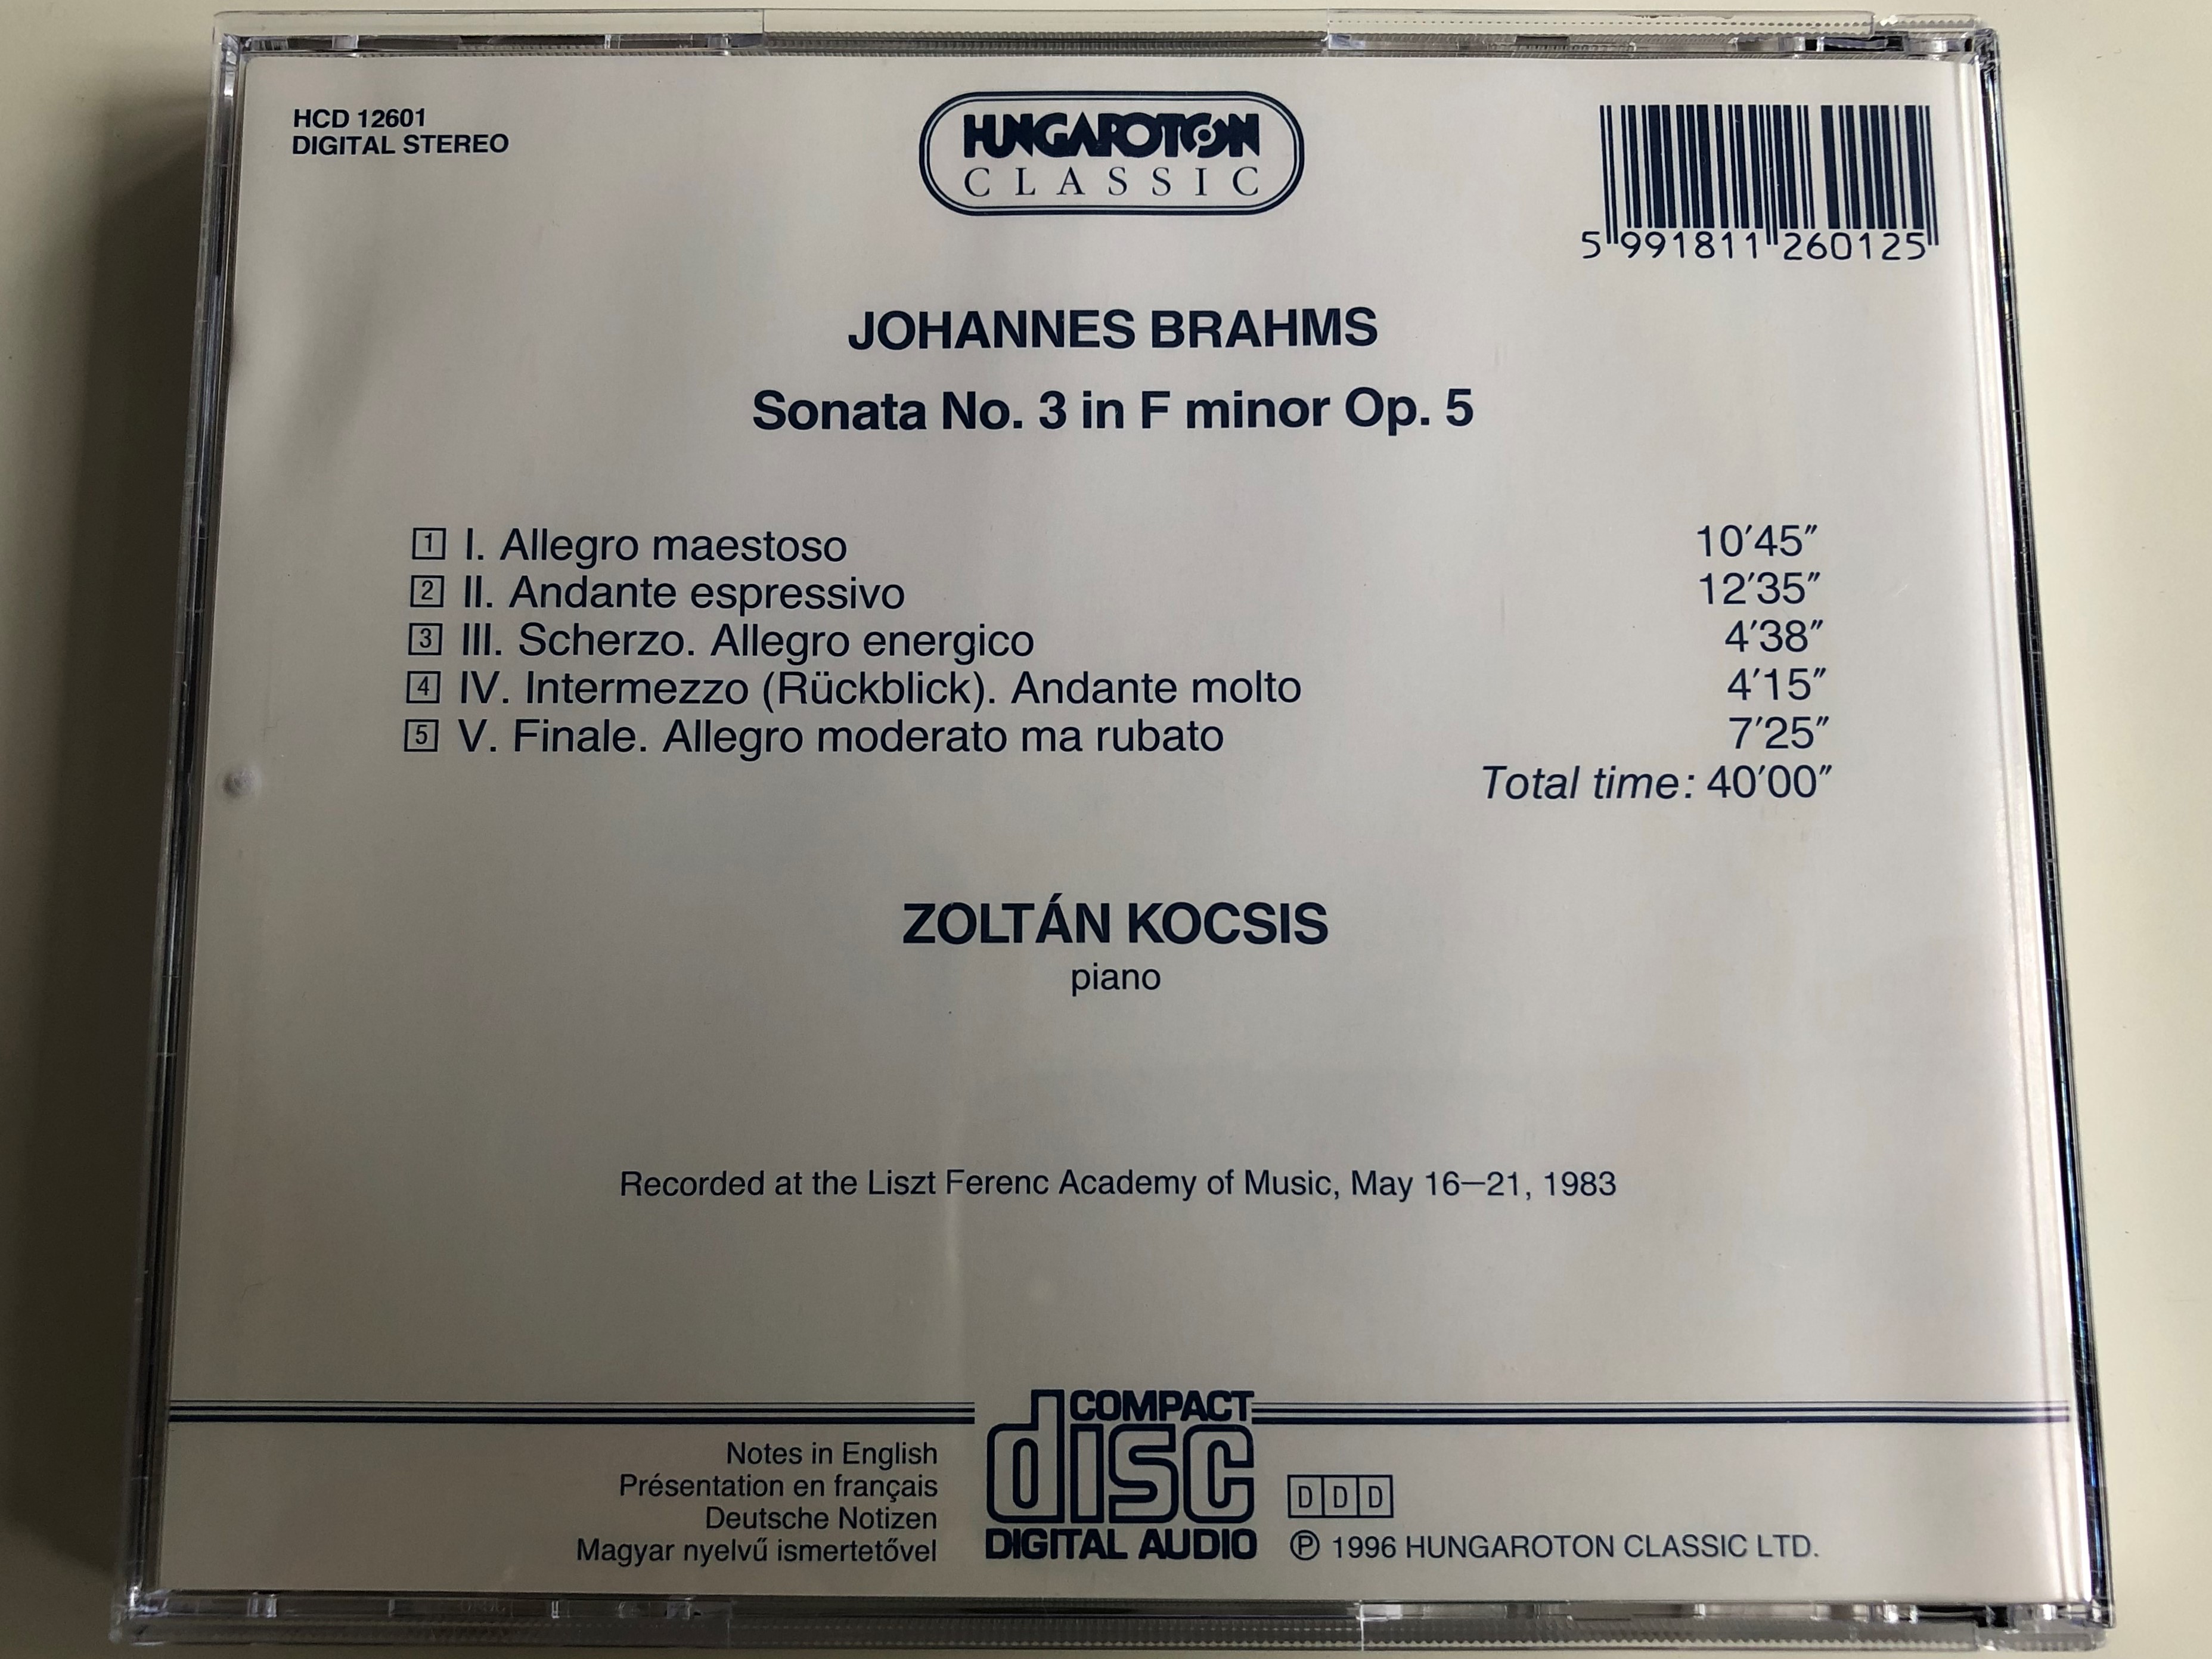 johannes-brahms-sonata-no.3-in-f-minor-op.5-zolt-n-kocsis-hungaroton-classic-audio-cd-1997-stereo-hcd-12601-6-.jpg